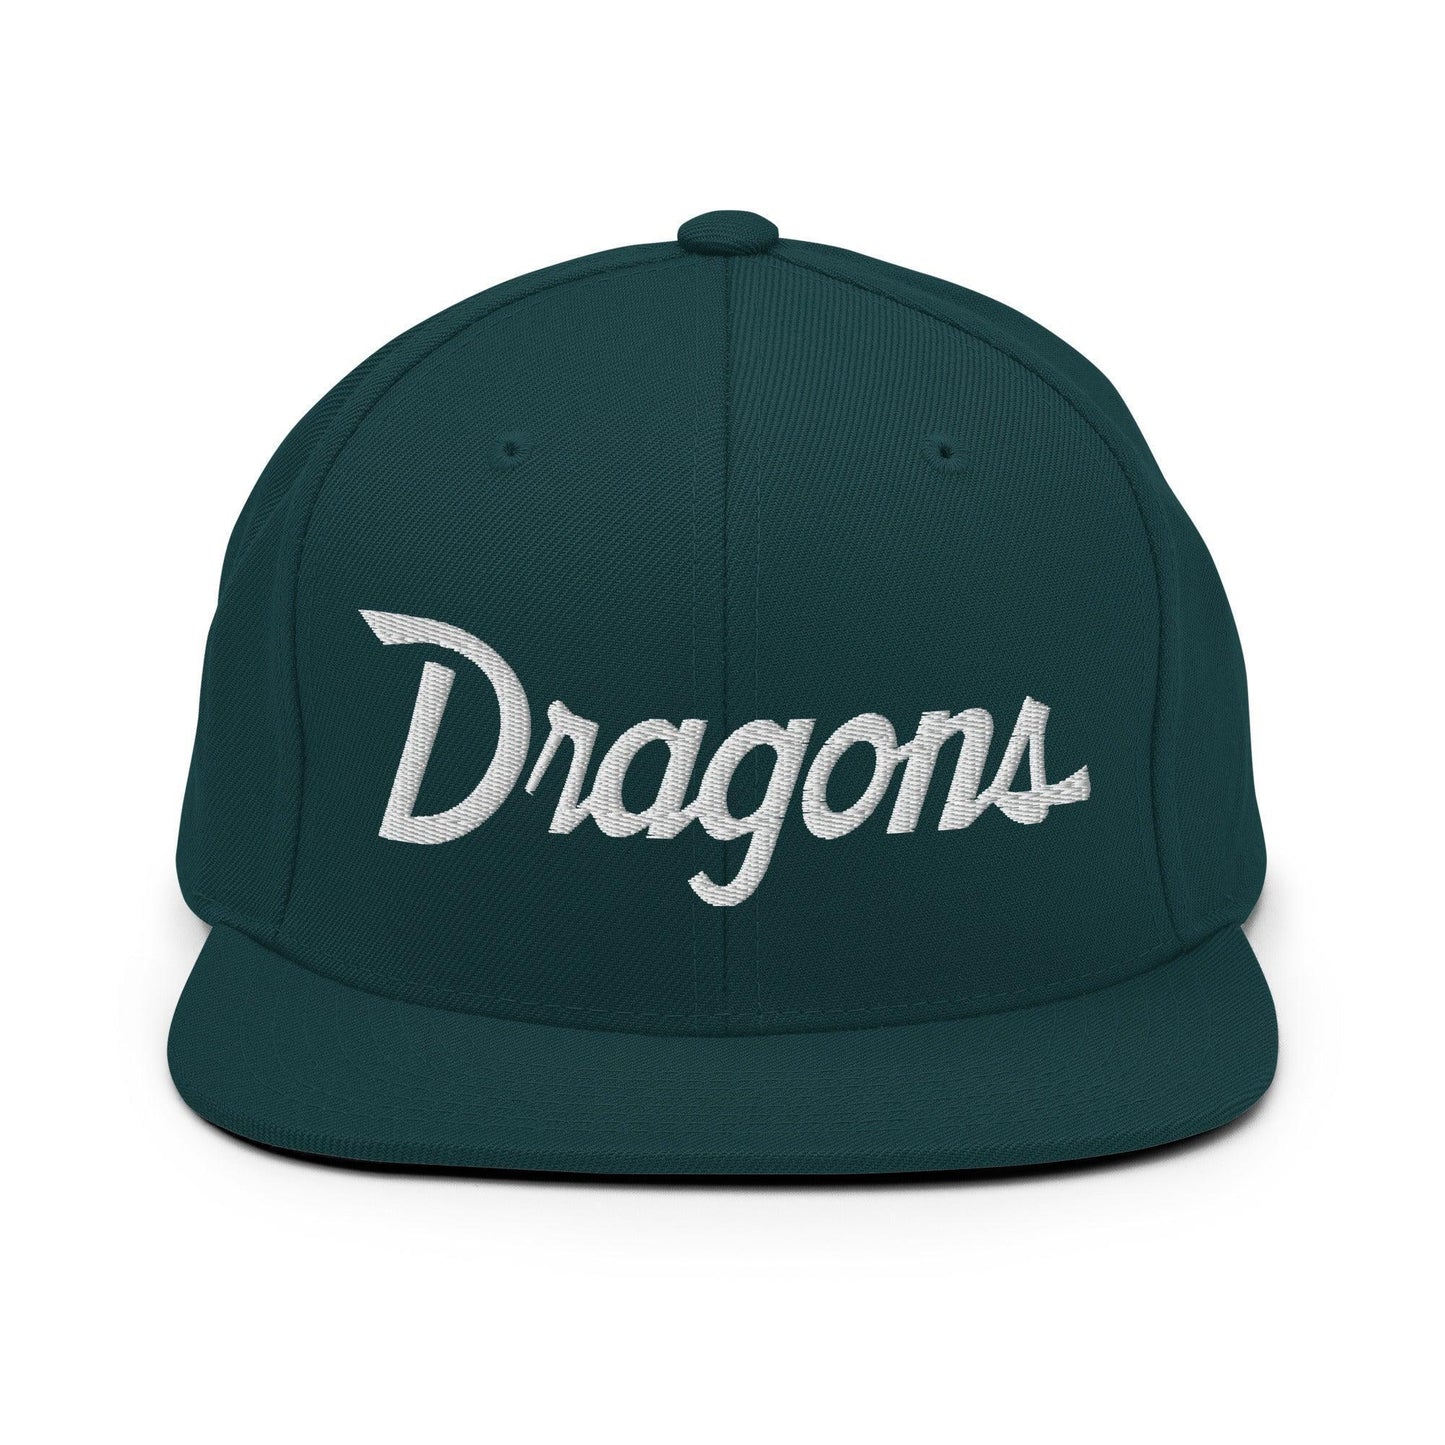 Dragons School Mascot Snapback Hat Spruce